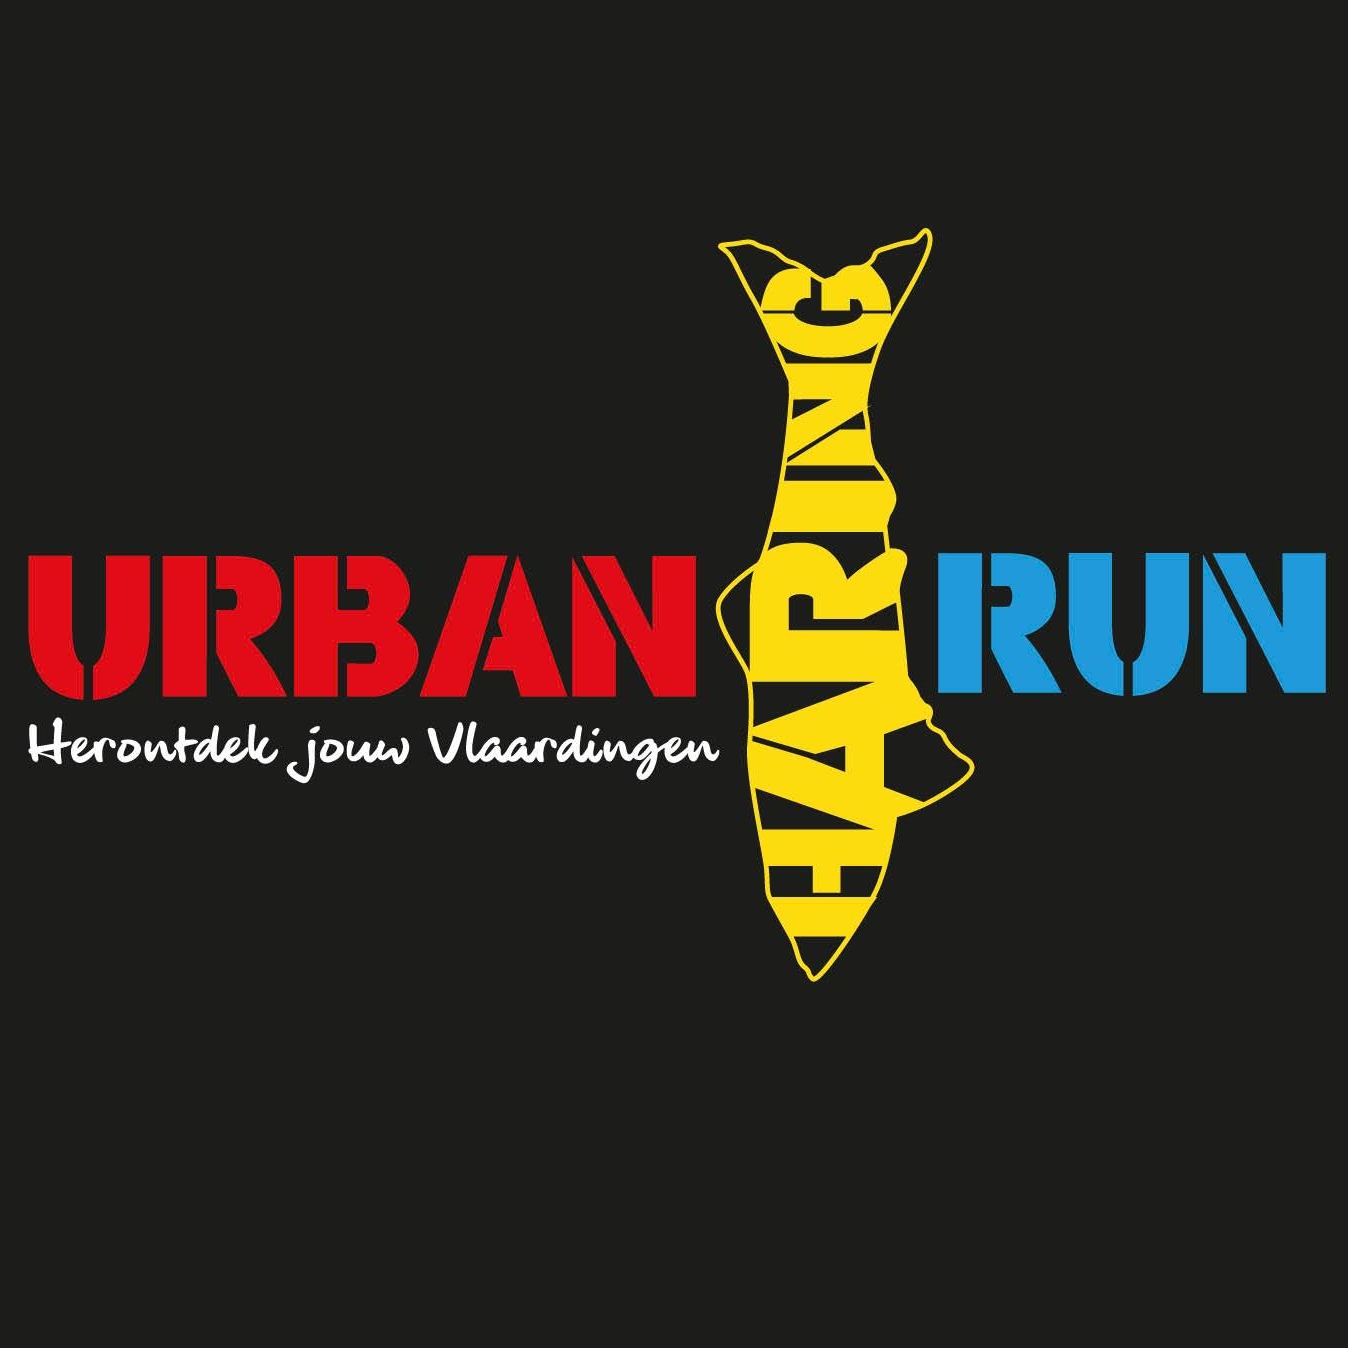 Urban Haring Run